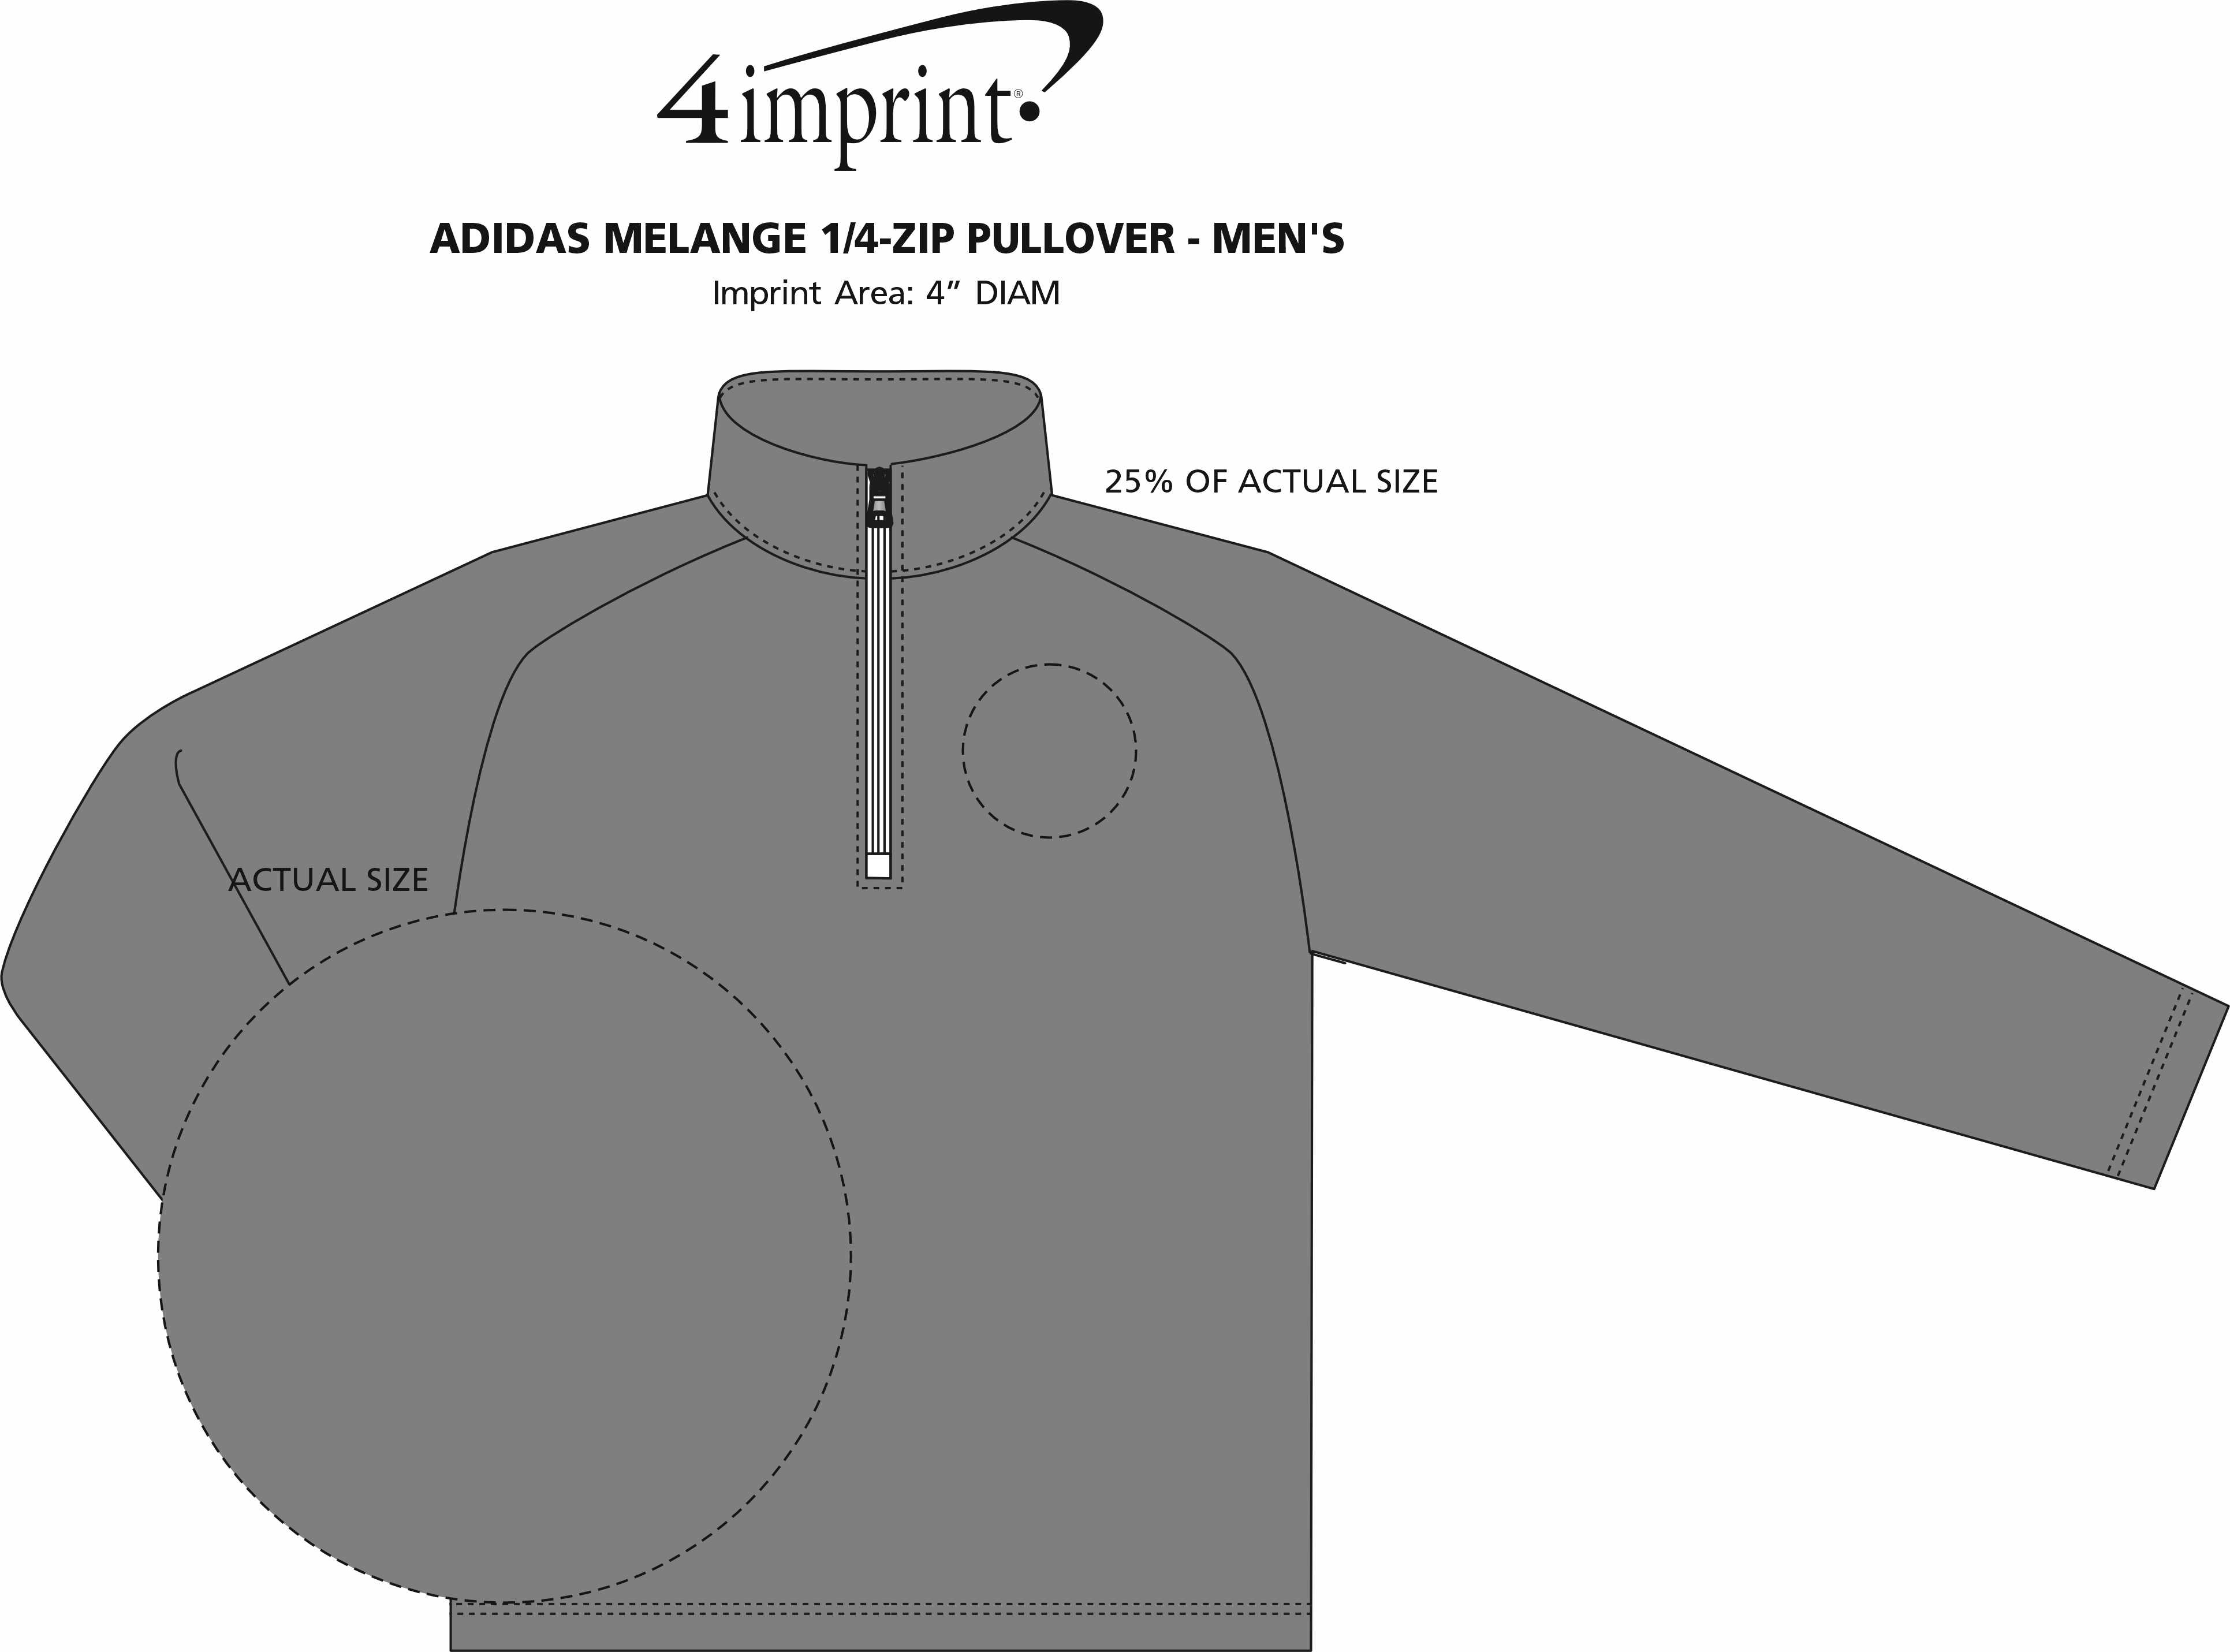 Imprint Area of adidas Melange 1/4-Zip Pullover - Men's - Embroidered